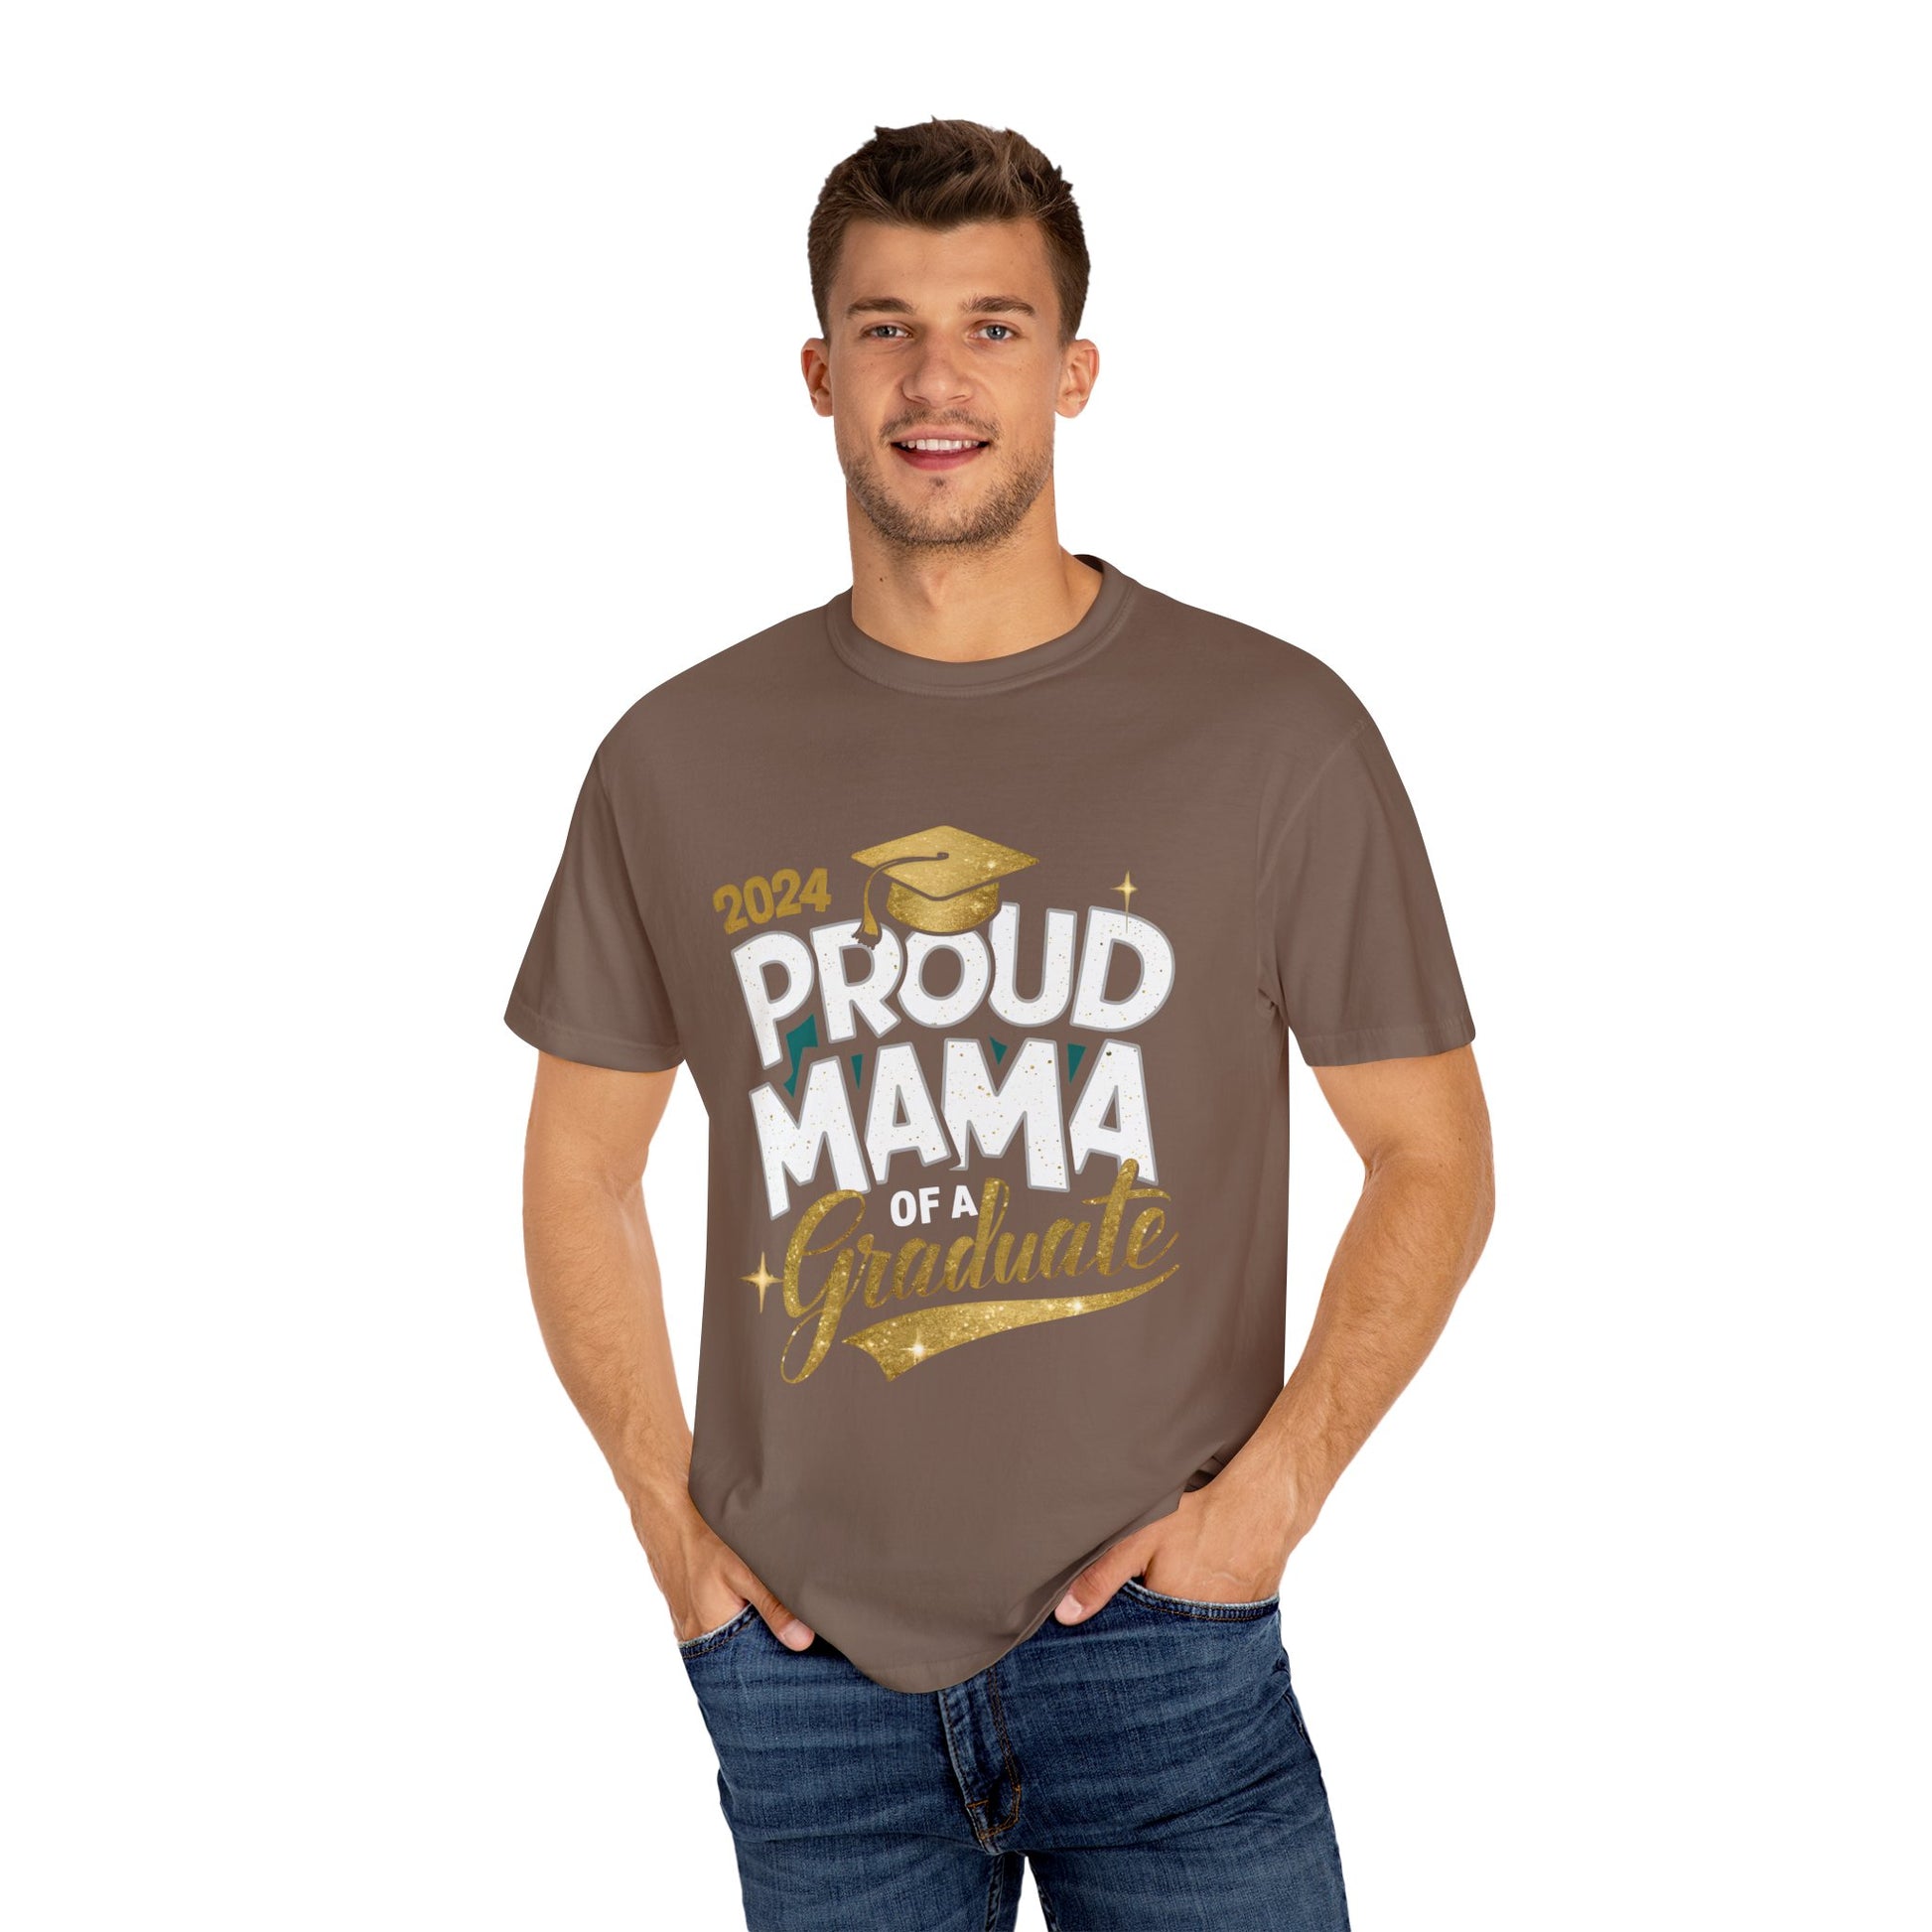 Proud Mama of a 2024 Graduate Unisex Garment-dyed T-shirt Cotton Funny Humorous Graphic Soft Premium Unisex Men Women Espresso T-shirt Birthday Gift-60